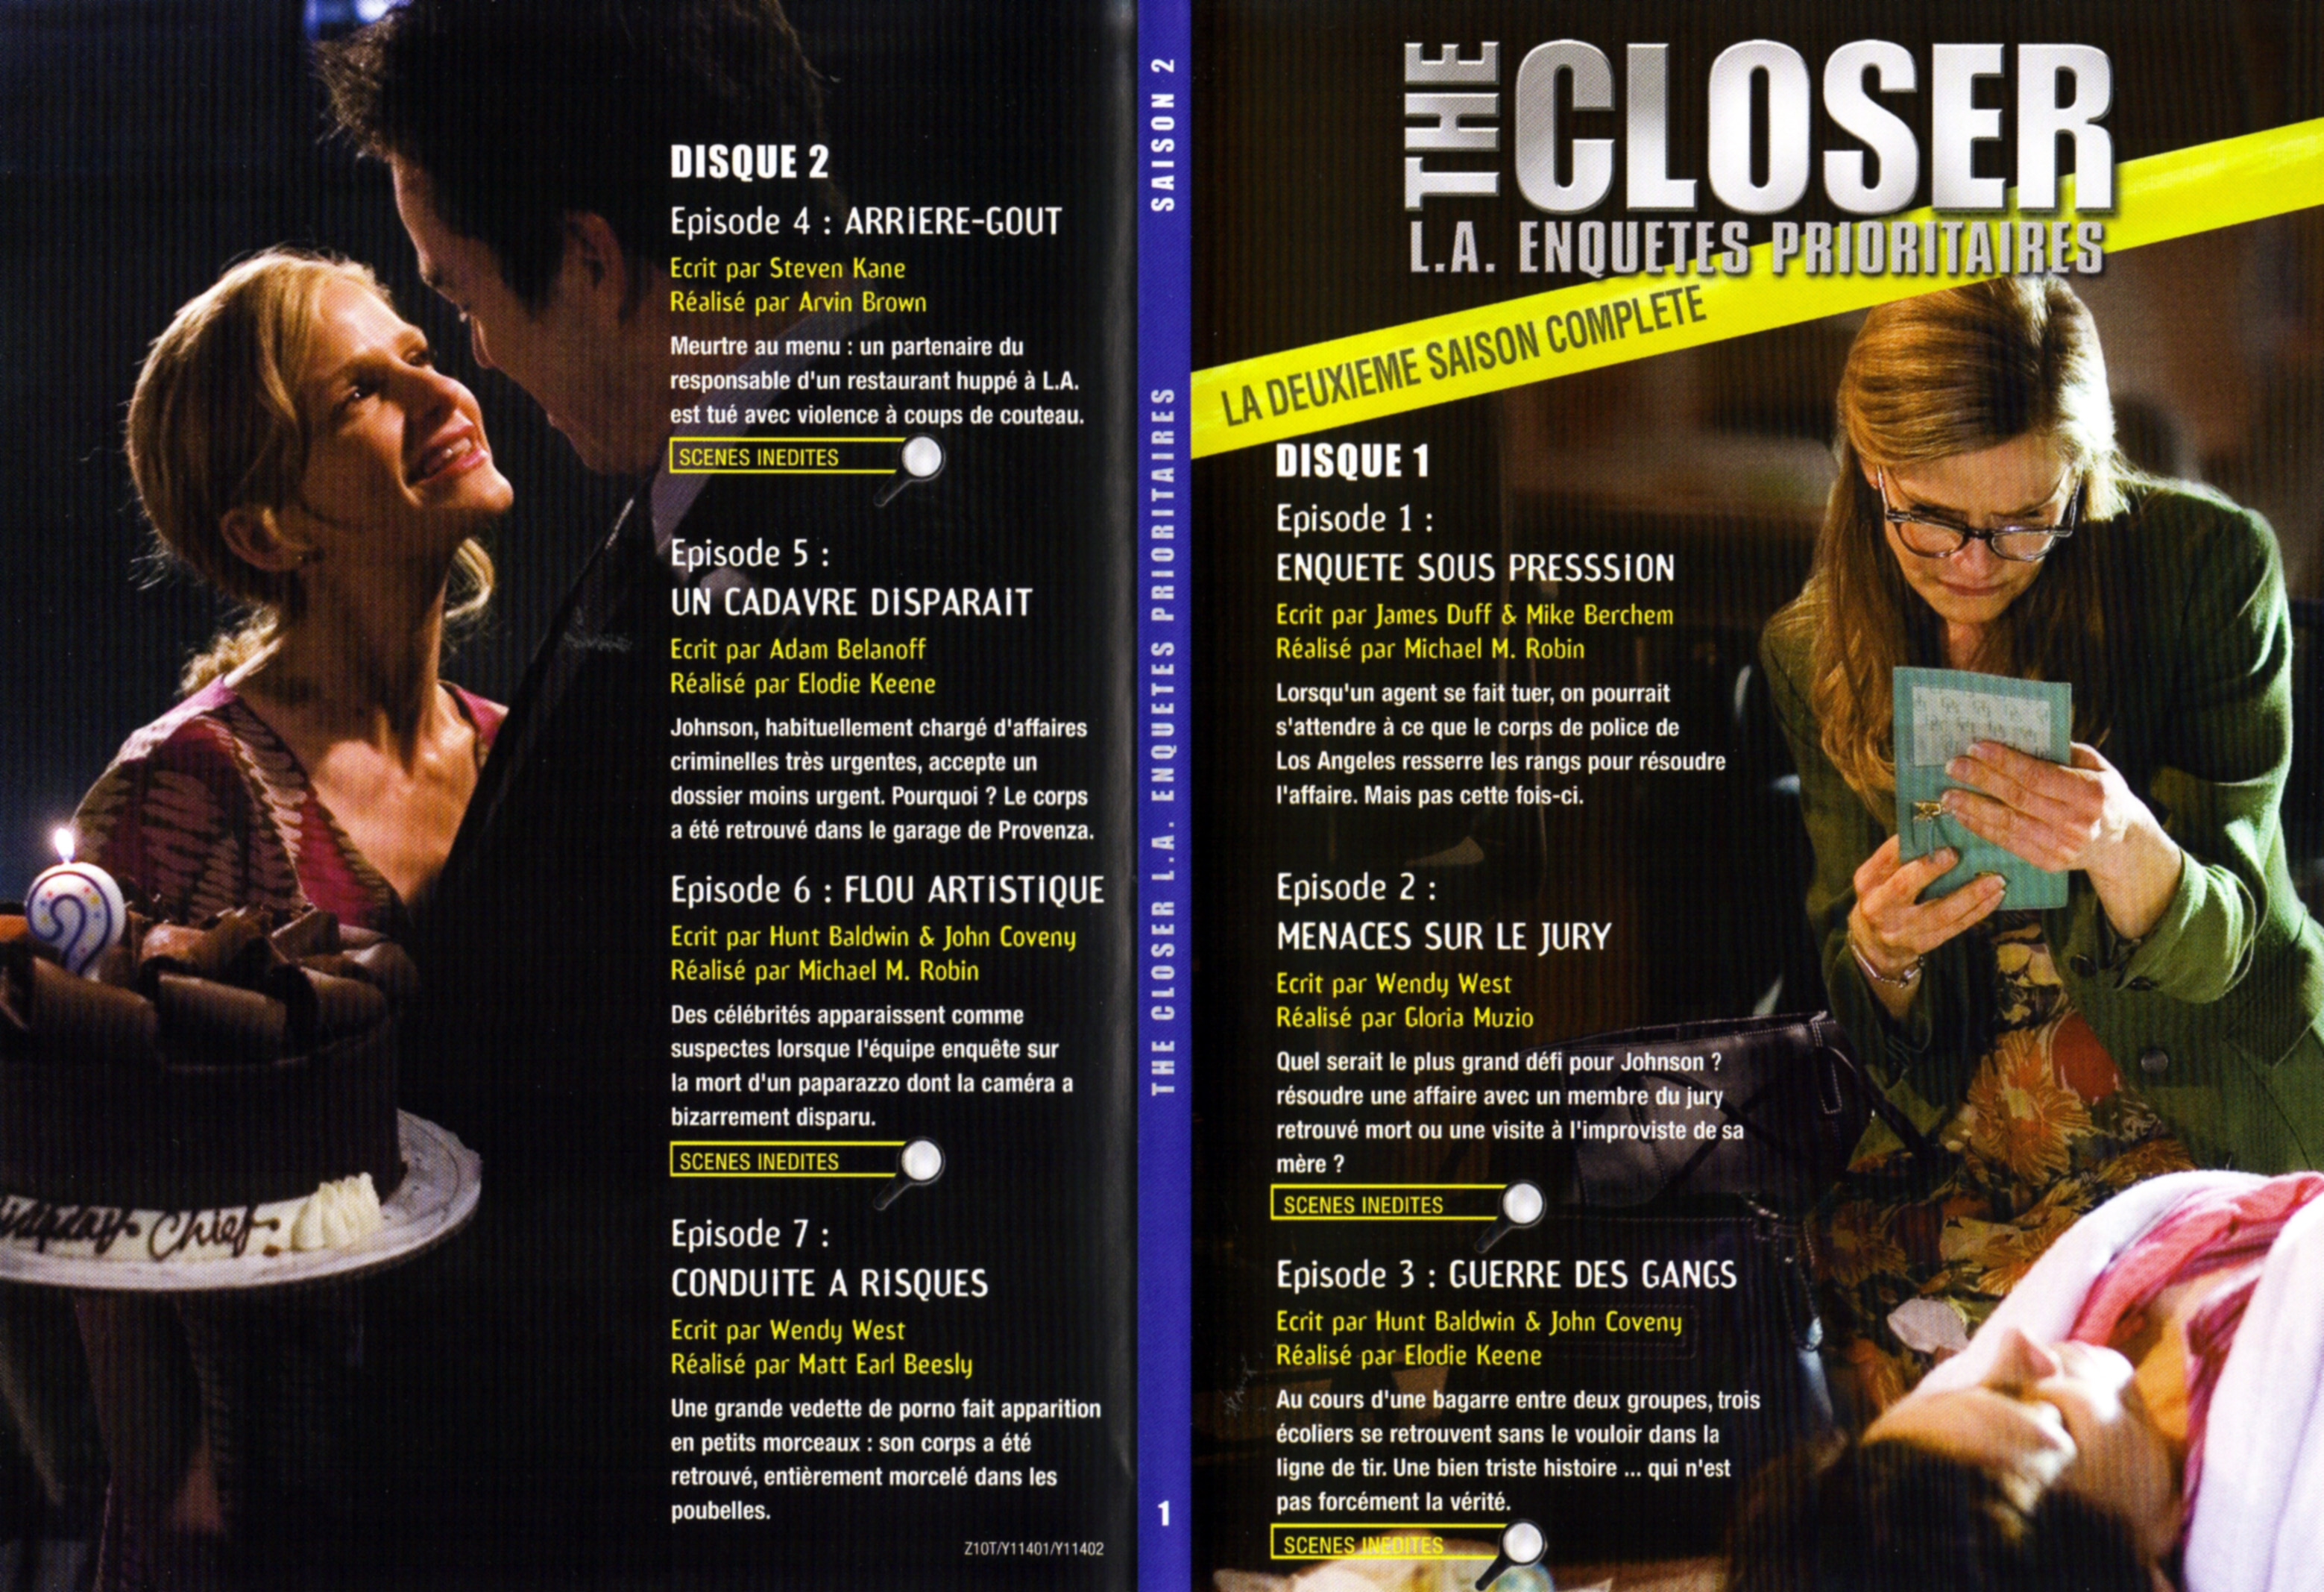 Jaquette DVD The Closer Saison 2 DVD 1